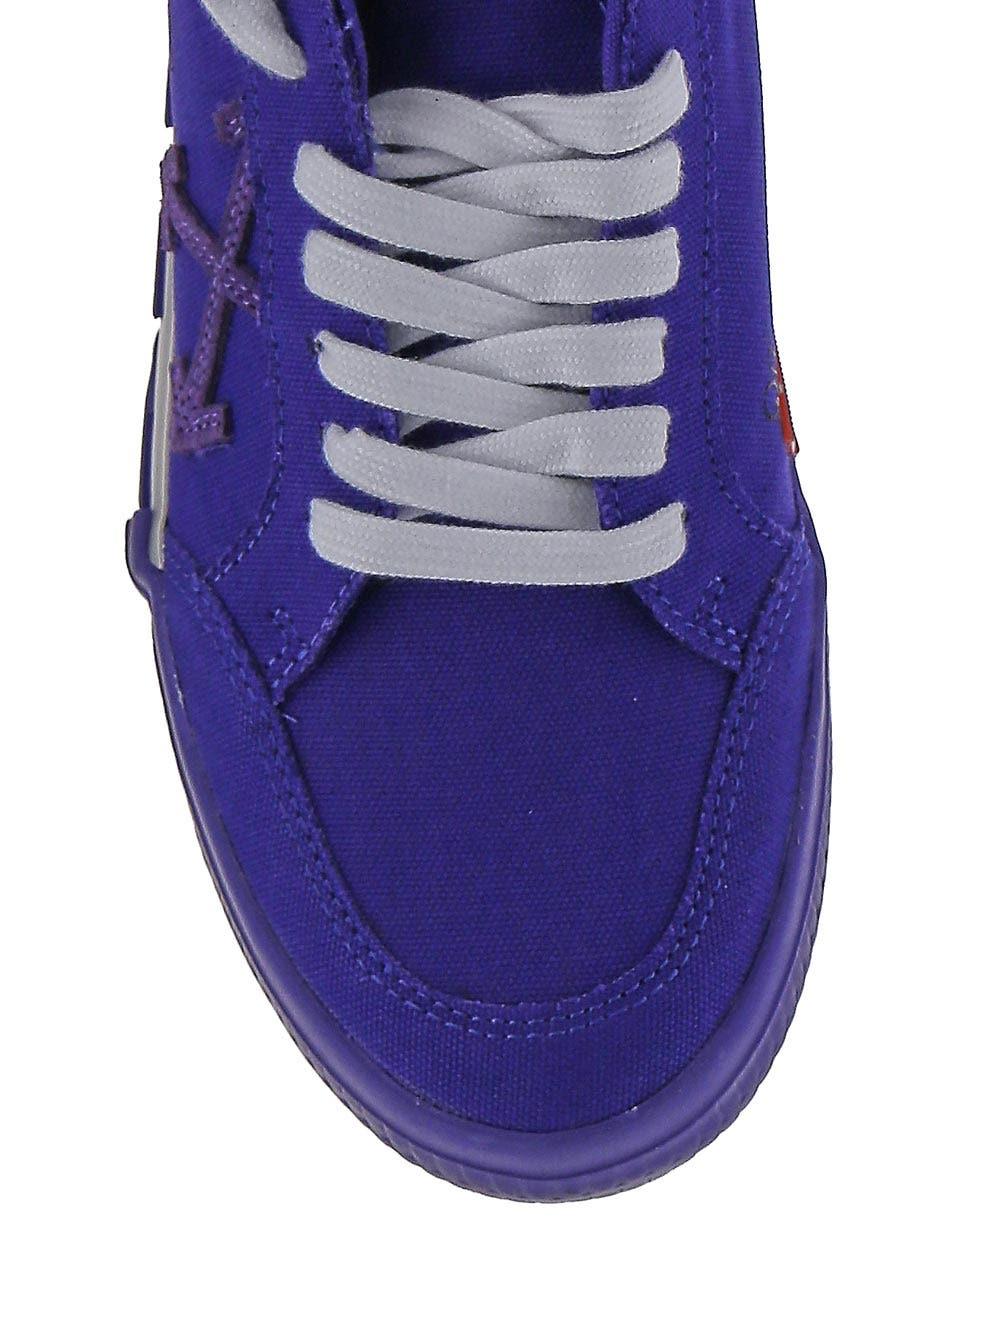 Off-White Virgil Abloh Low Vulcanized Black Purple Canvas Sneakers